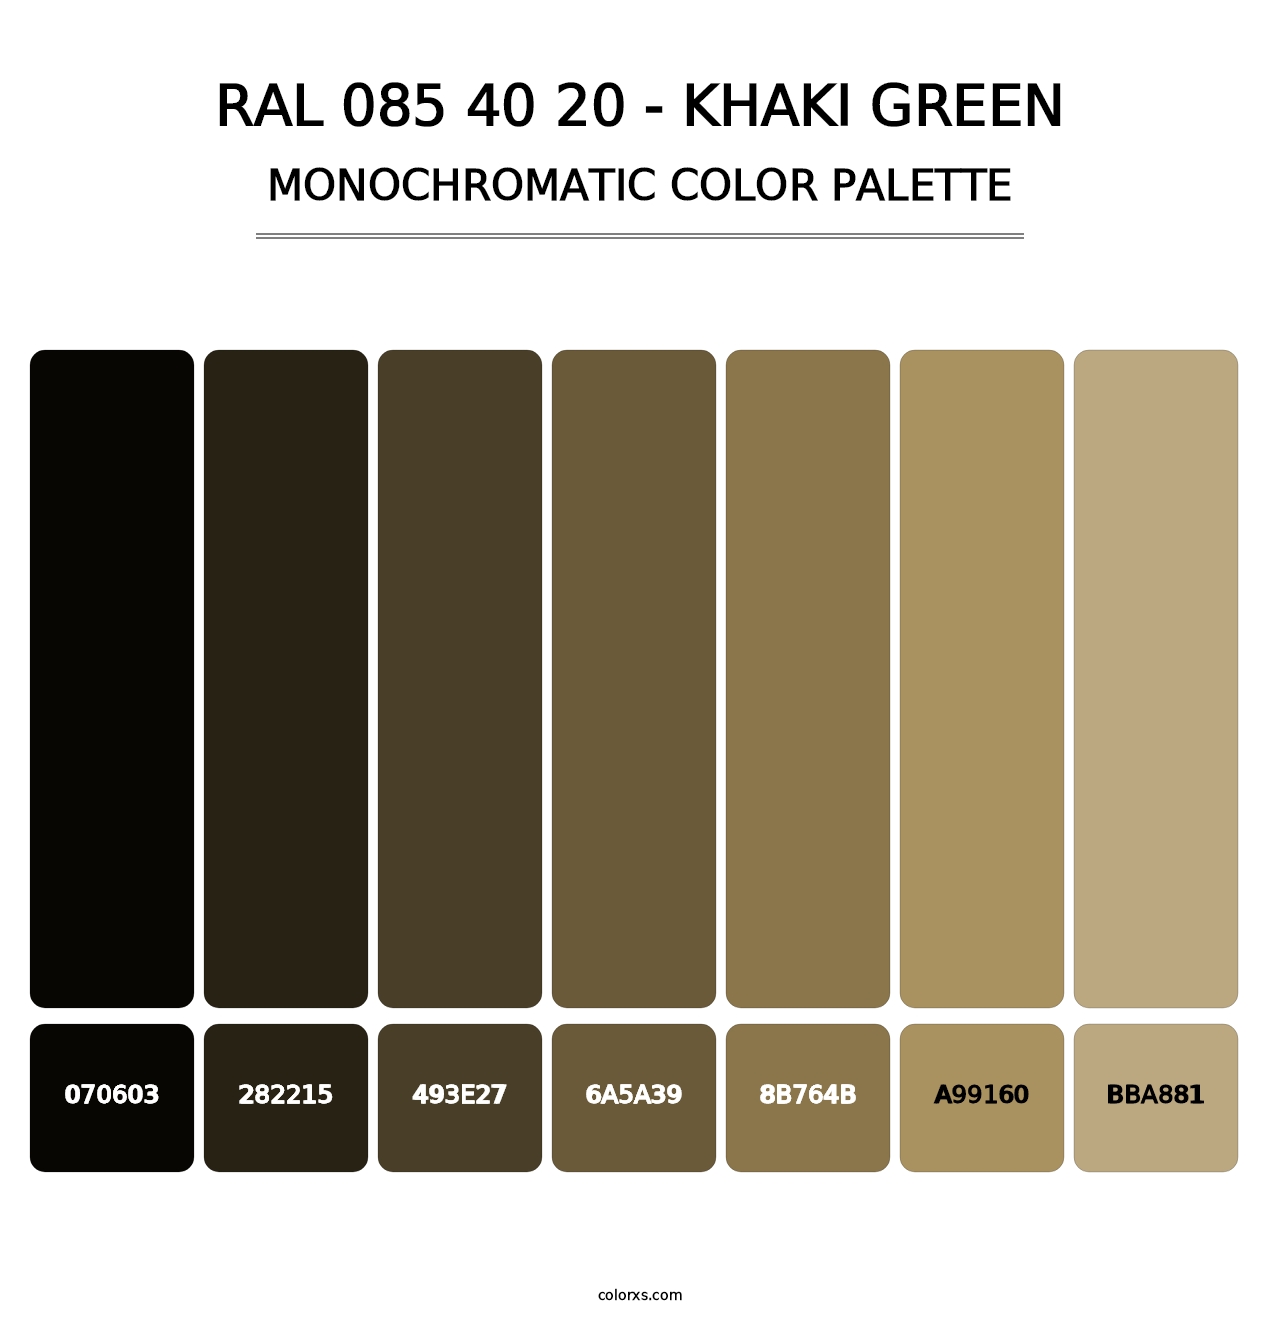 RAL 085 40 20 - Khaki Green - Monochromatic Color Palette